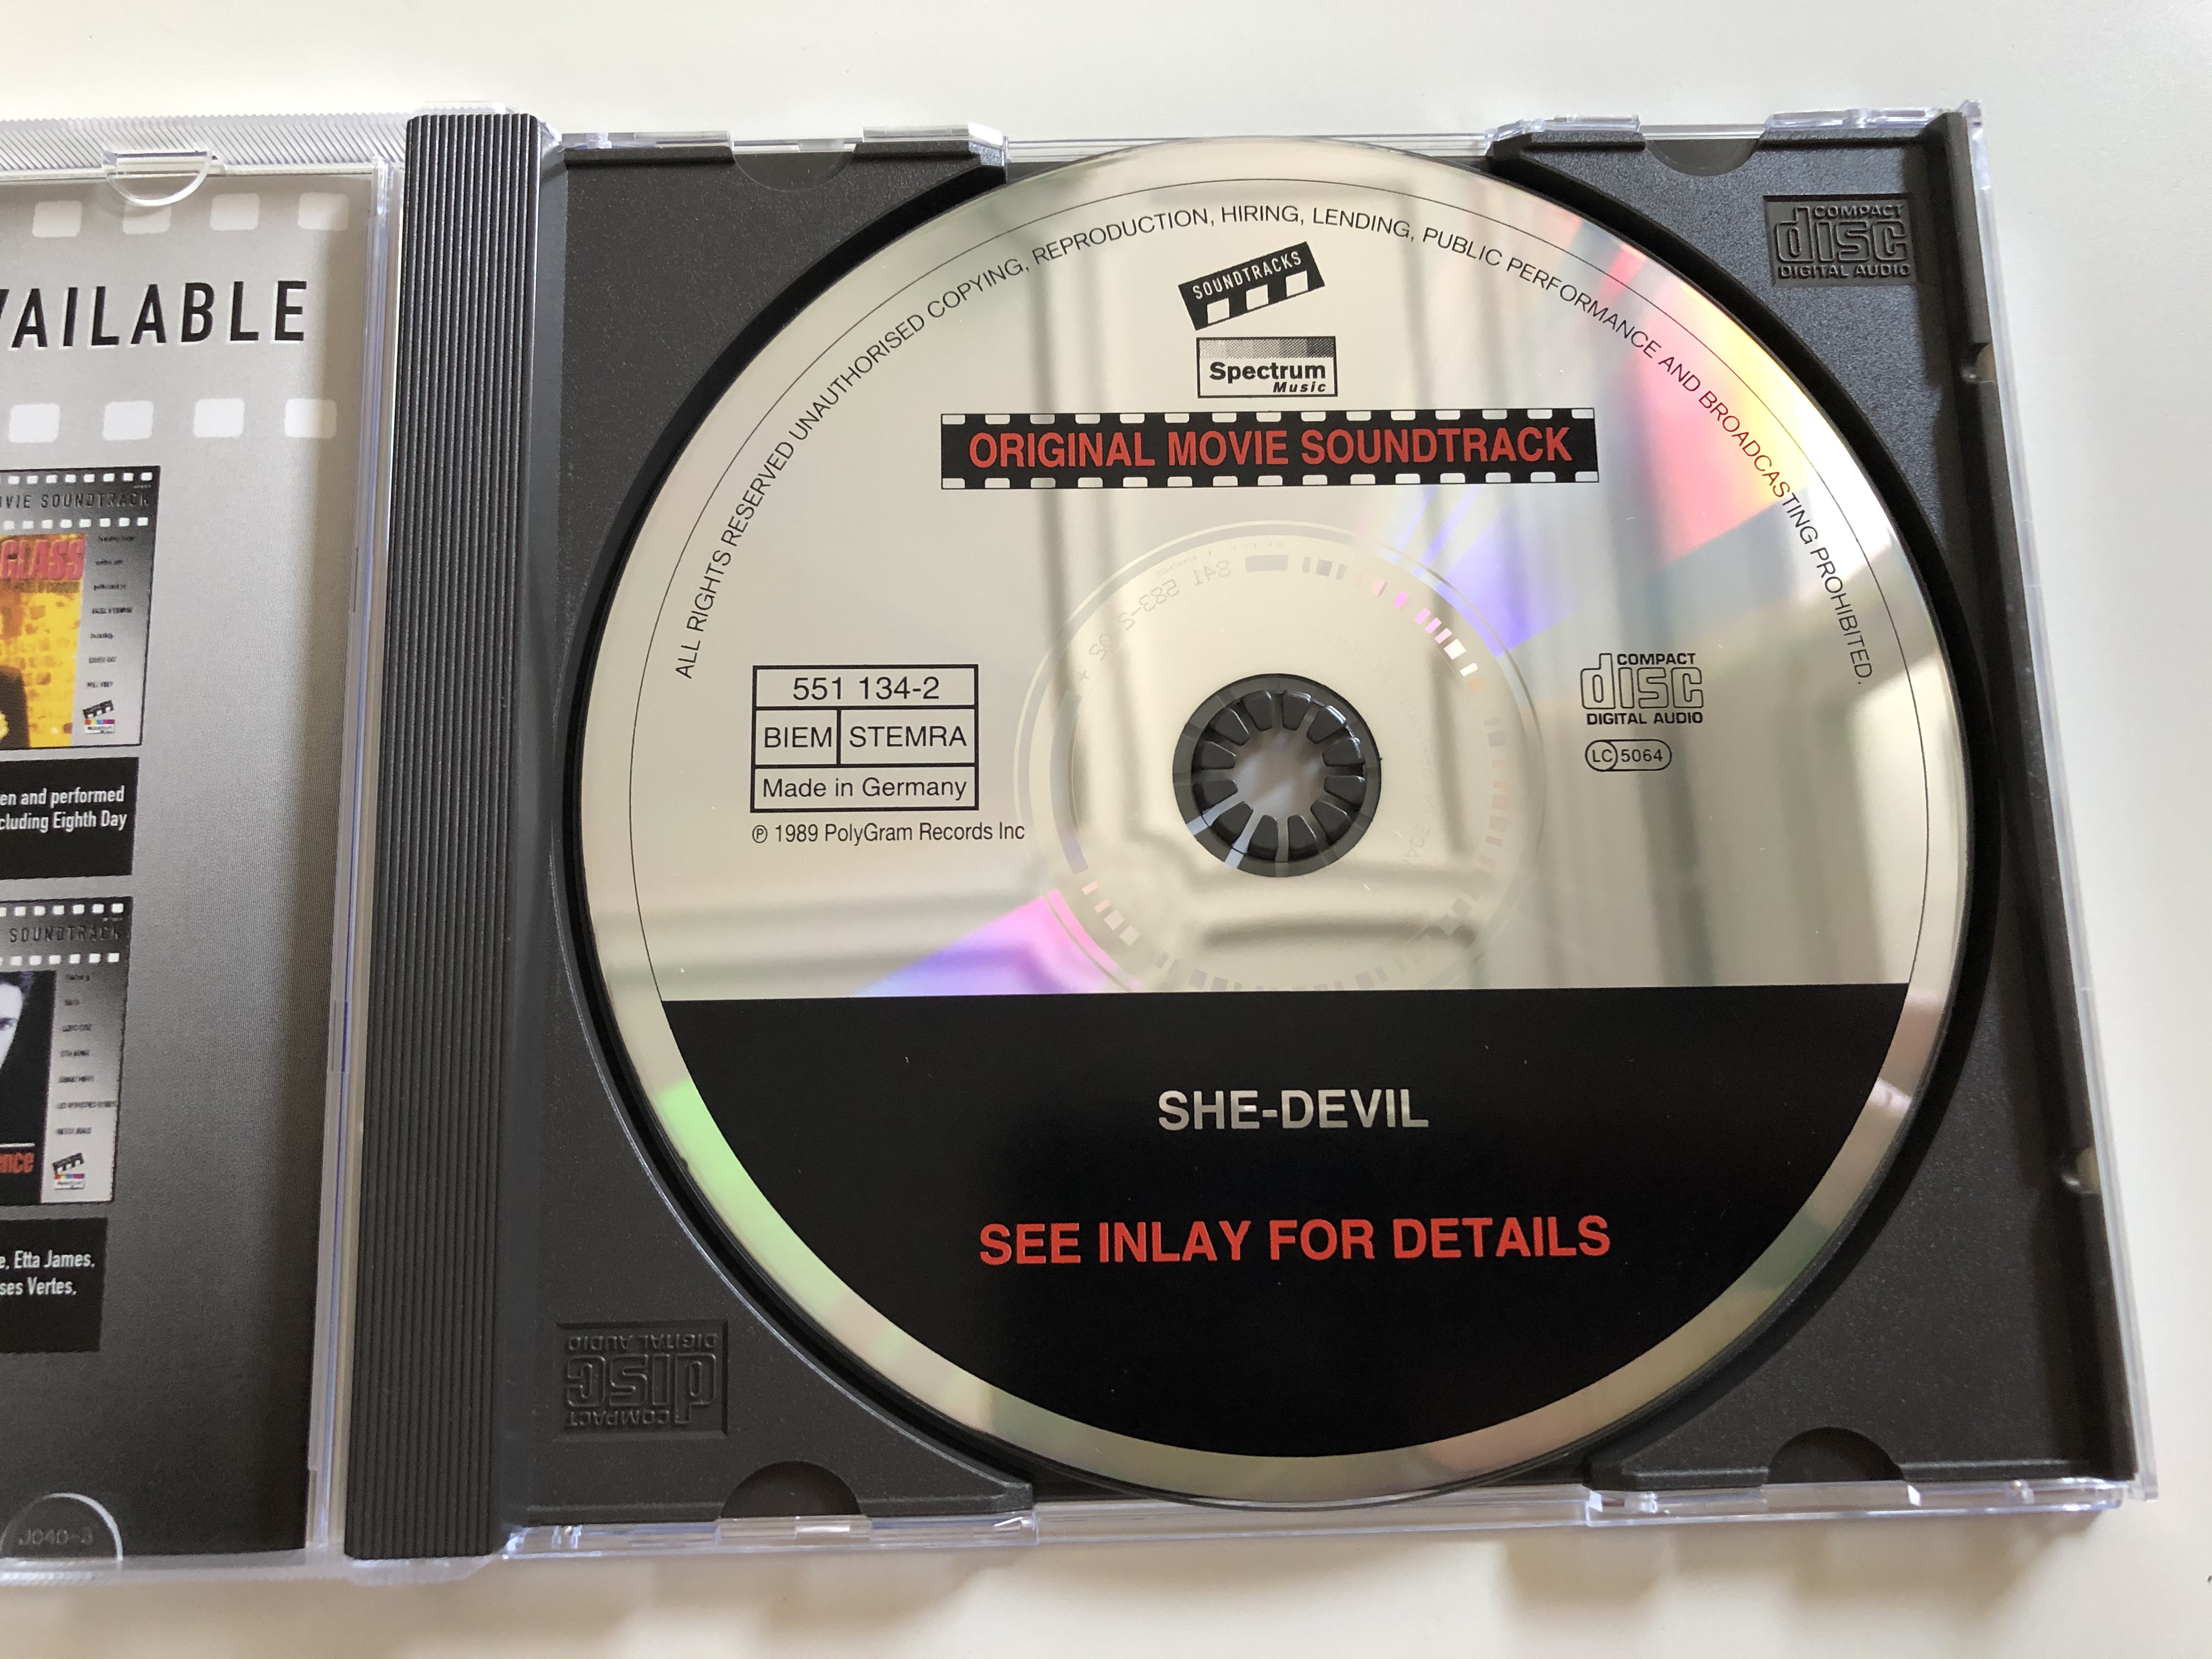 original-movie-soundtrack-she-devil-featuring-elvis-presley-chubby-checker-fat-boys-yello-carmel-d-mob-spectrum-music-audio-cd-1989-551-134-2-3-.jpg